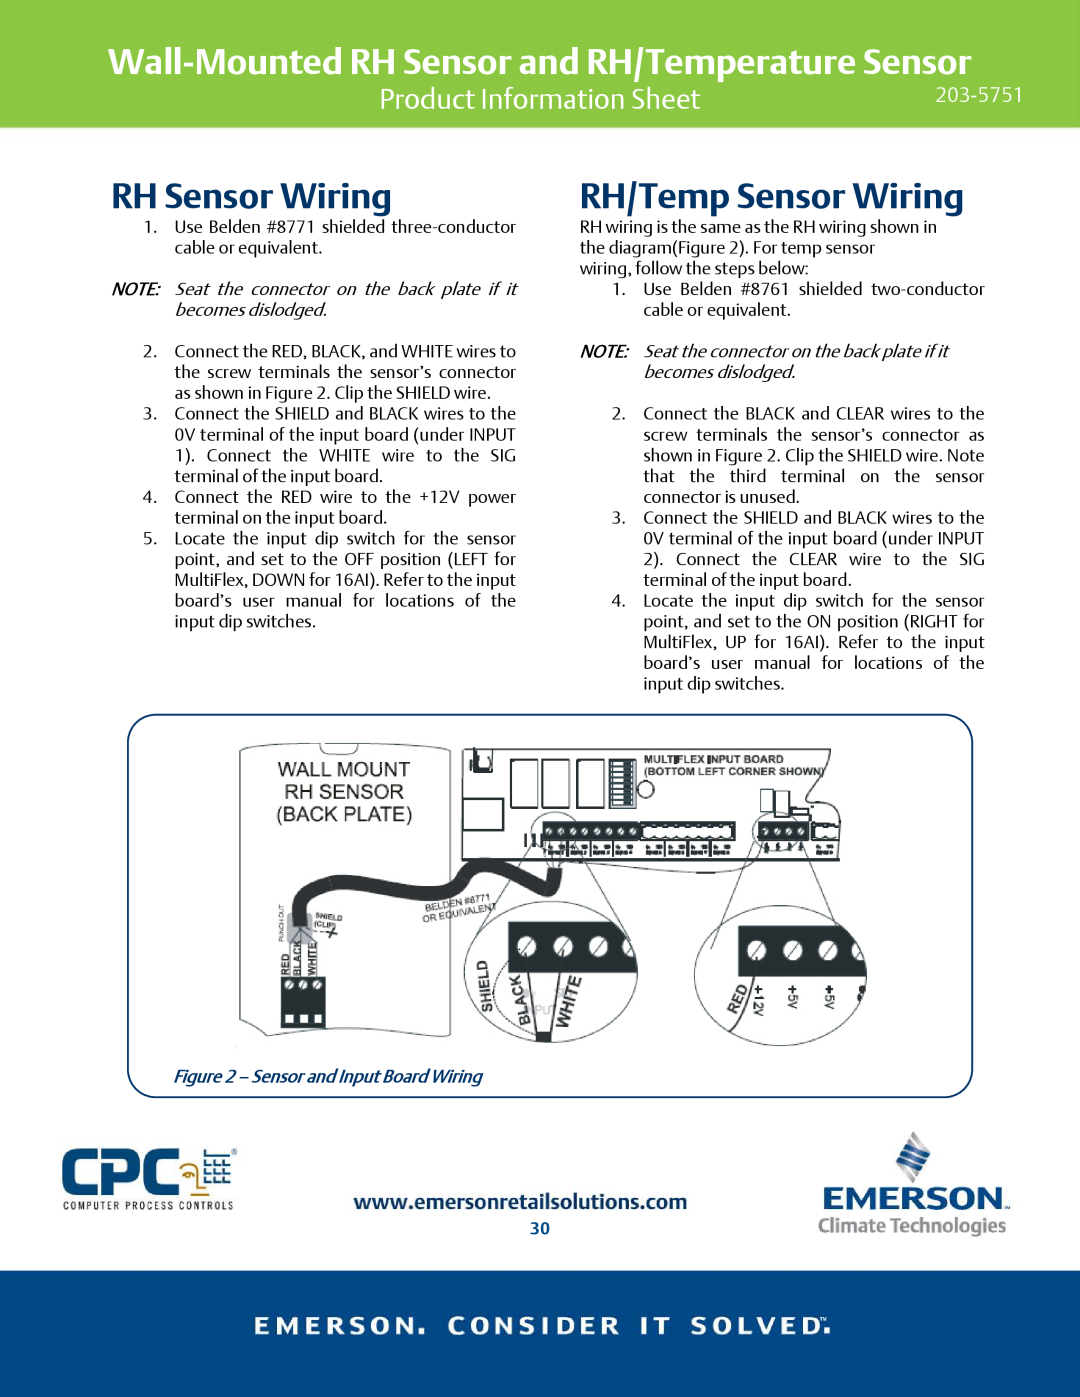 Emerson 203-5751 RH Sensor Wiring, RH/Temp Sensor Wiring, Sensor and Input Board Wiring, Product Information Sheet 